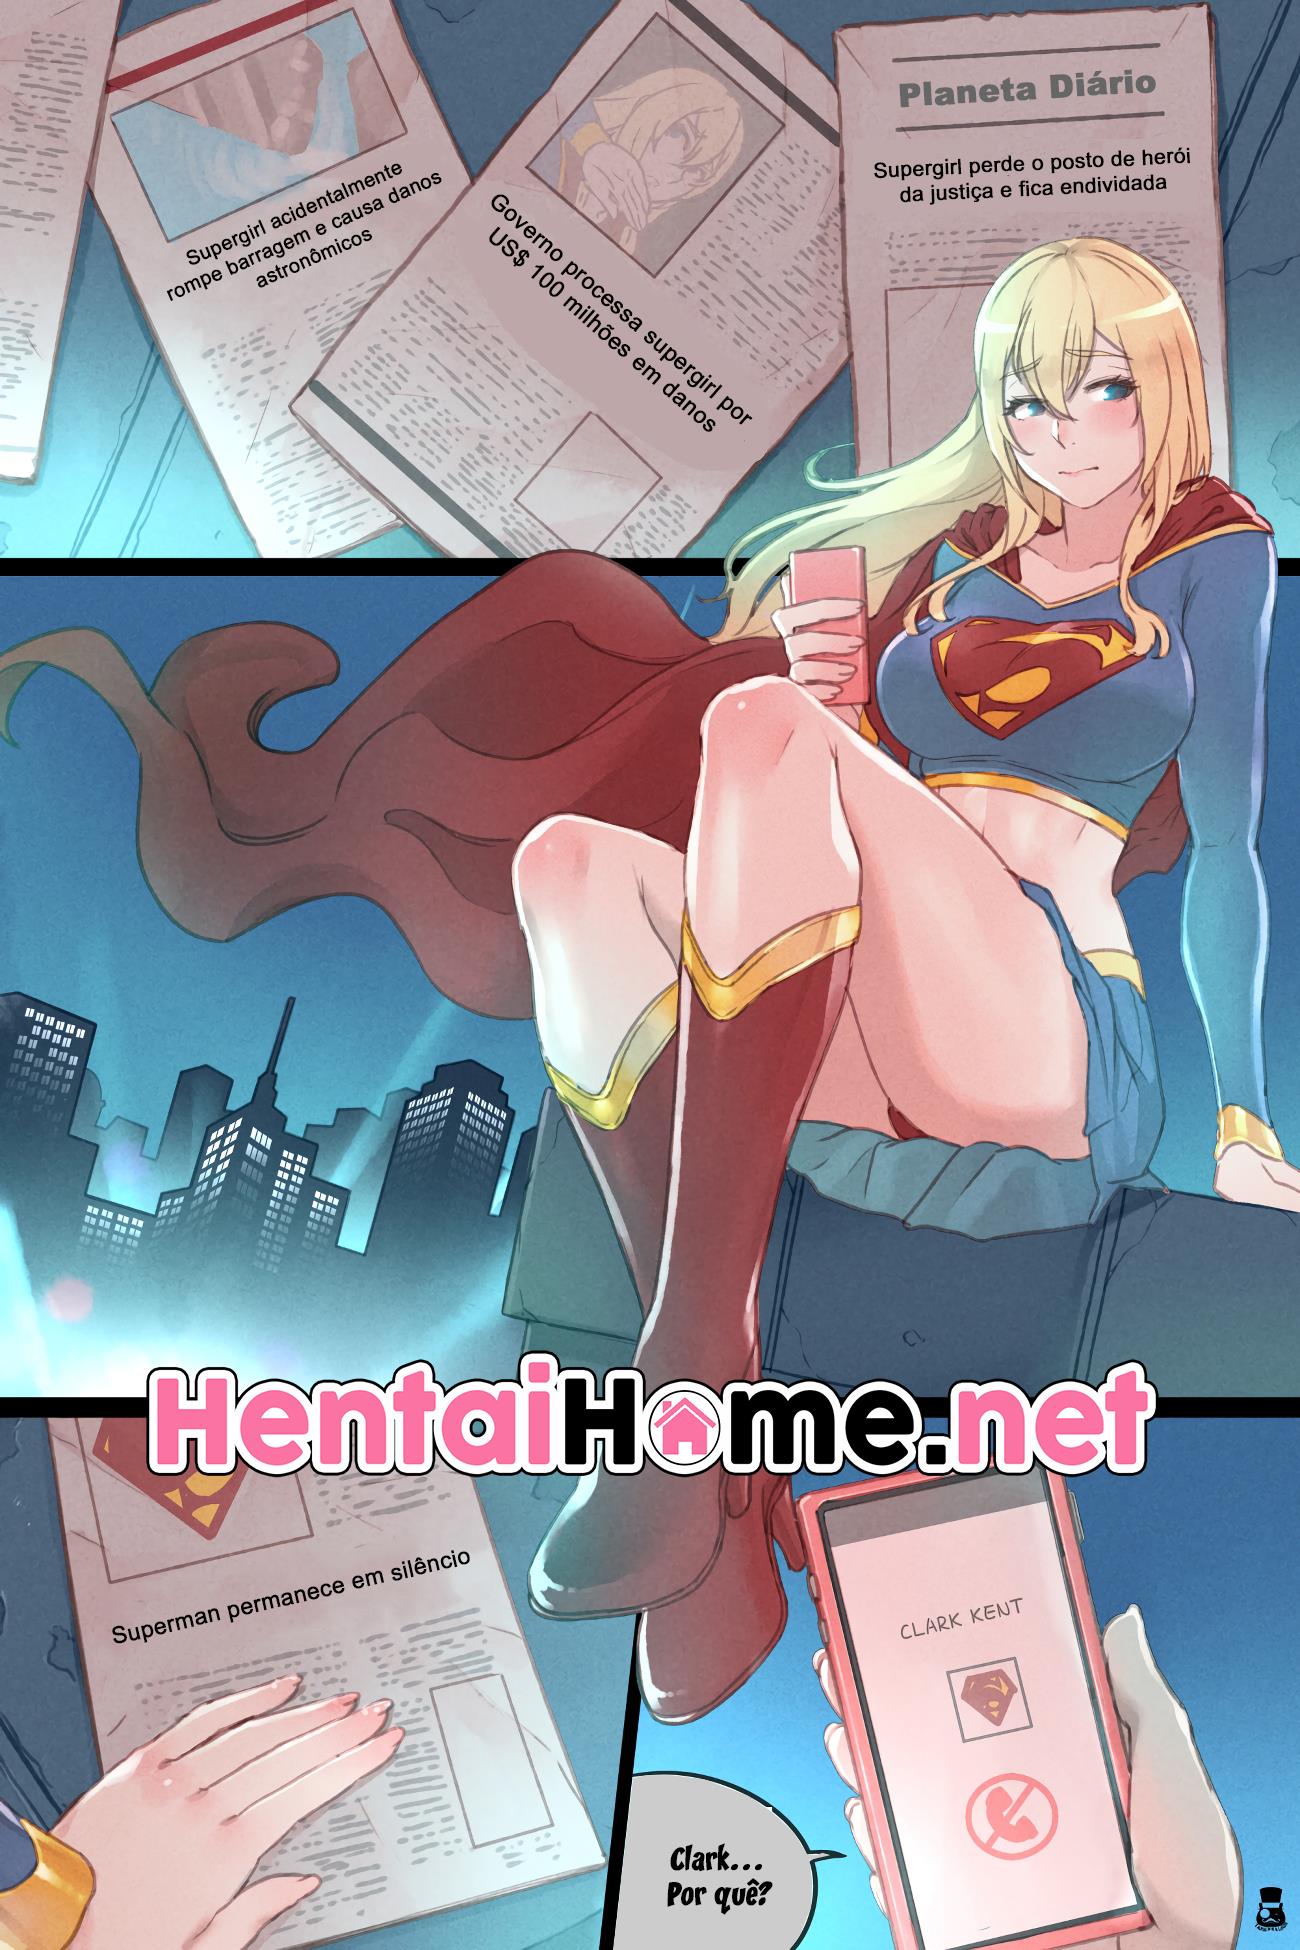 Supergirl heroína sem calcinha (2)